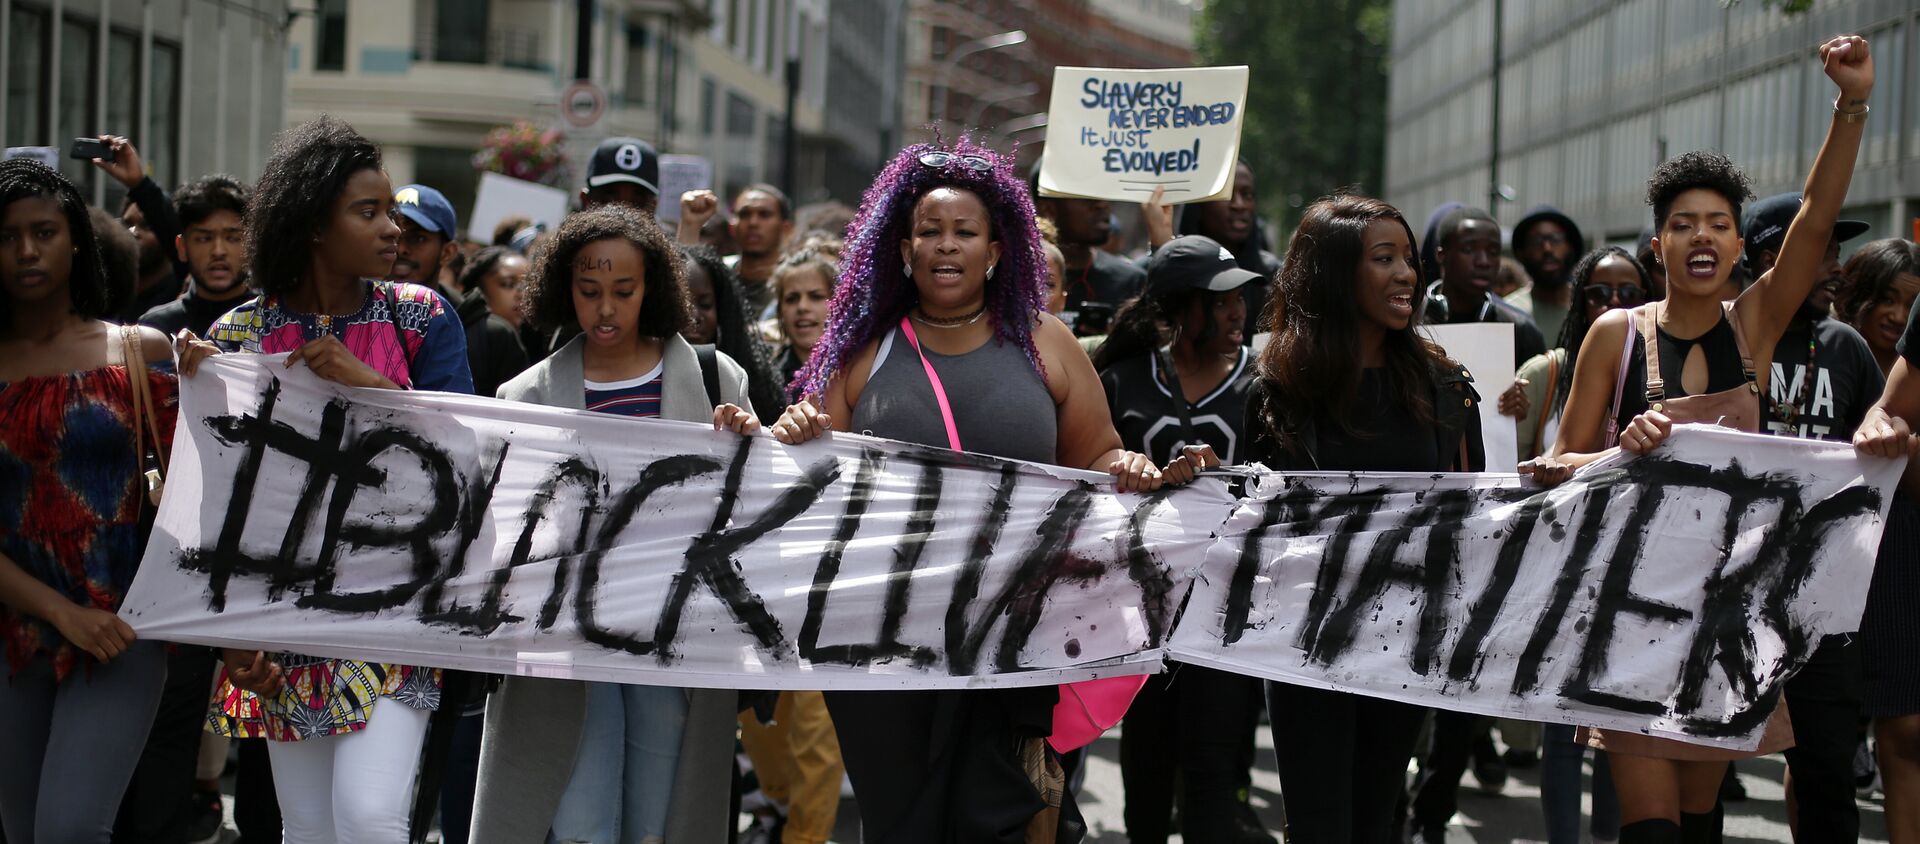 El colectivo Black Lives Matter monta protestas en Inglaterra - Sputnik Mundo, 1920, 04.06.2020